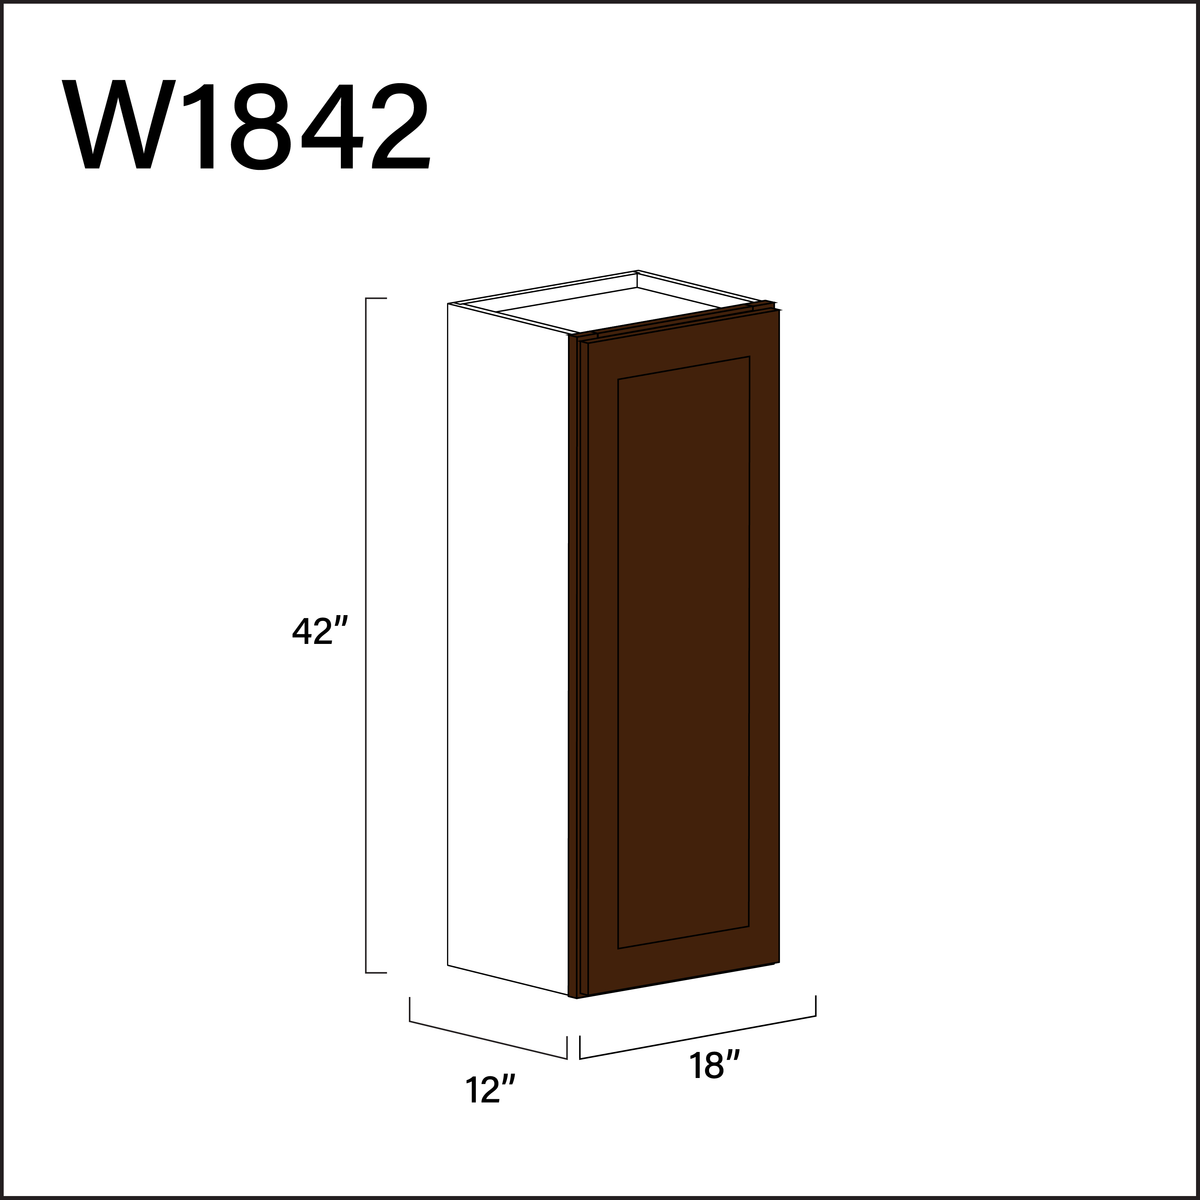 Espresso Shaker Single Door Wall Cabinet - 18" W x 42" H x 12" D